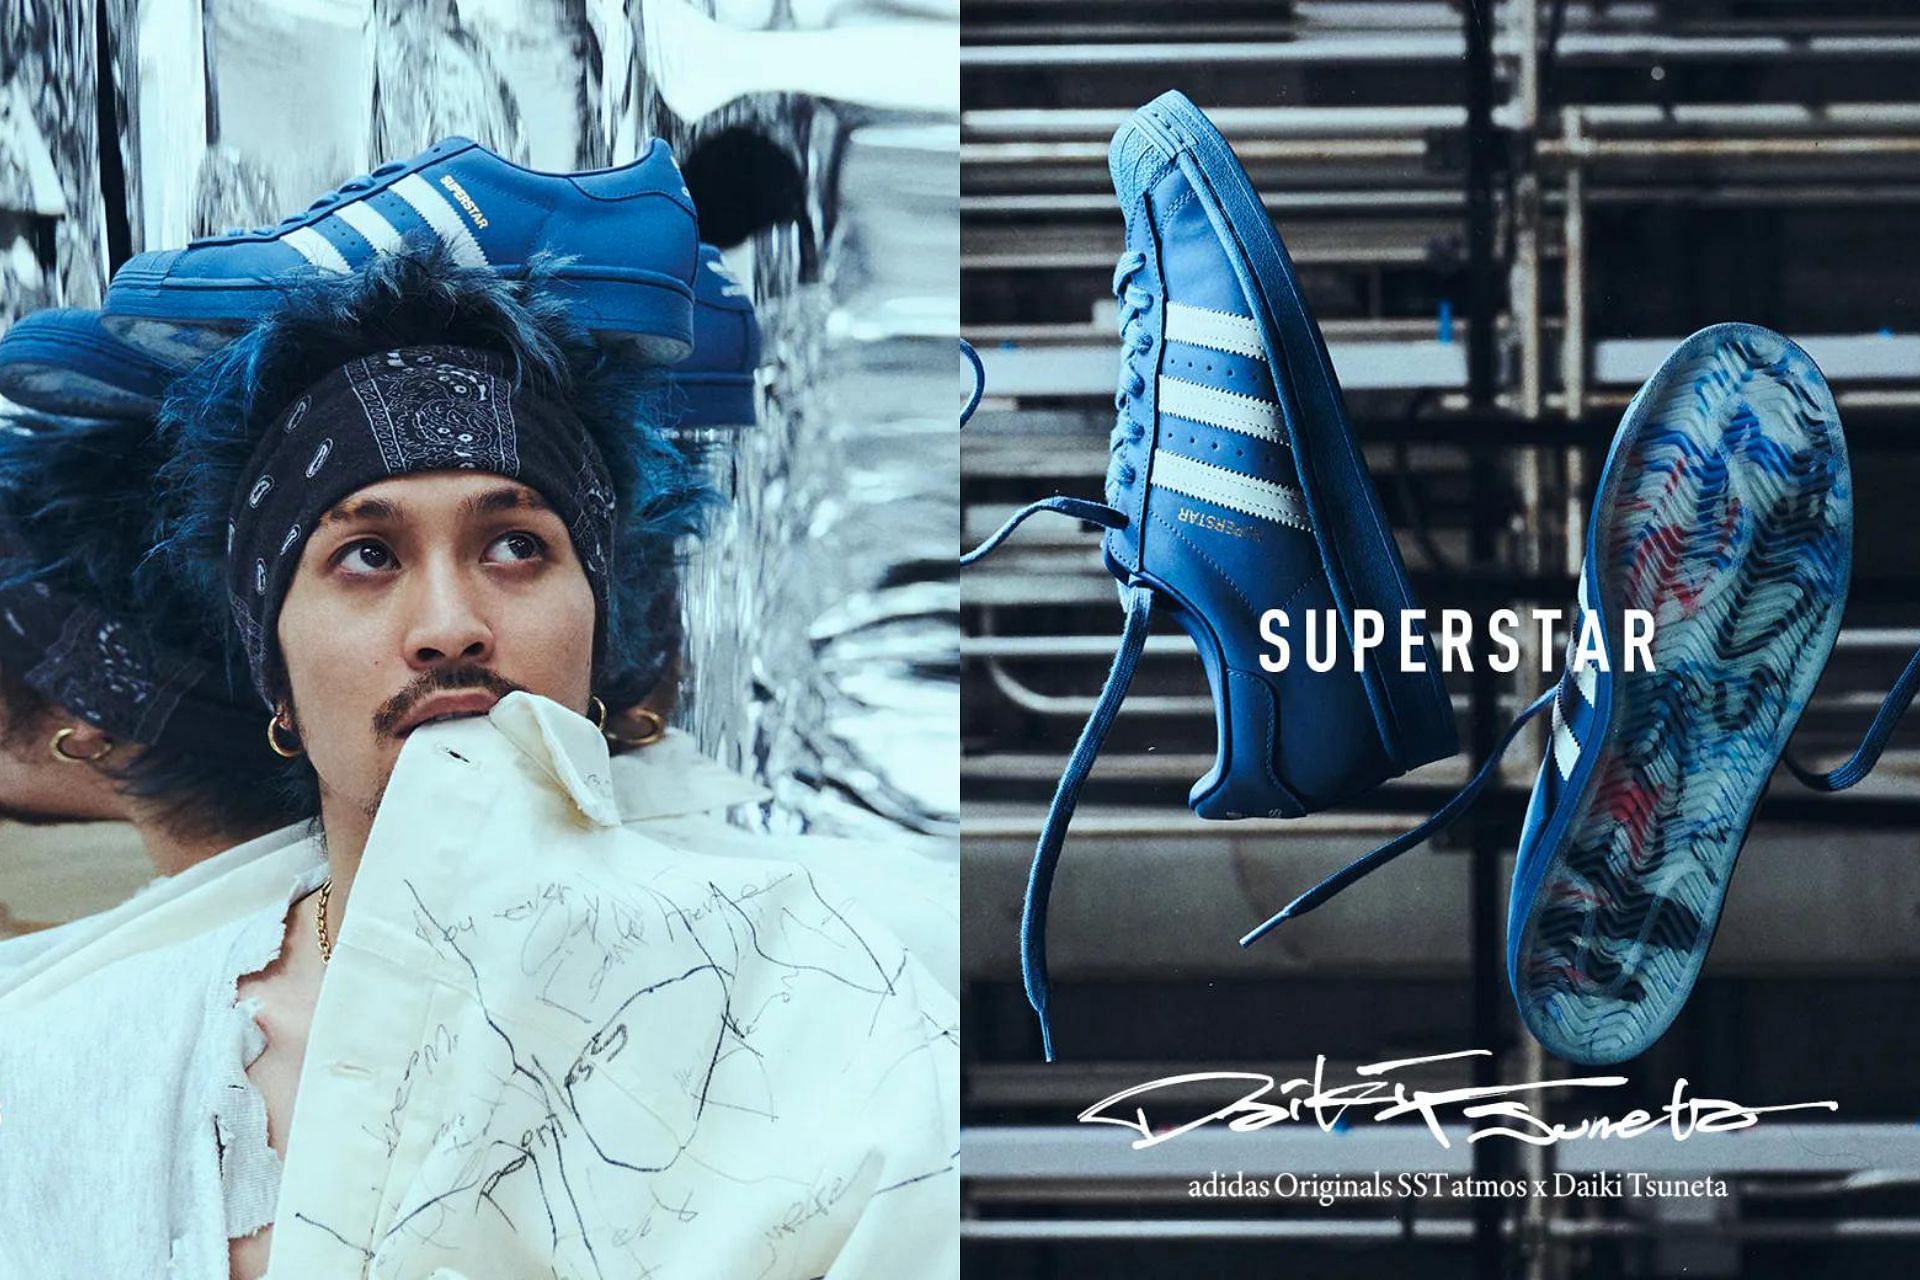 Where to buy Daiki Tsuneta x Adidas Superstar? Price, release date